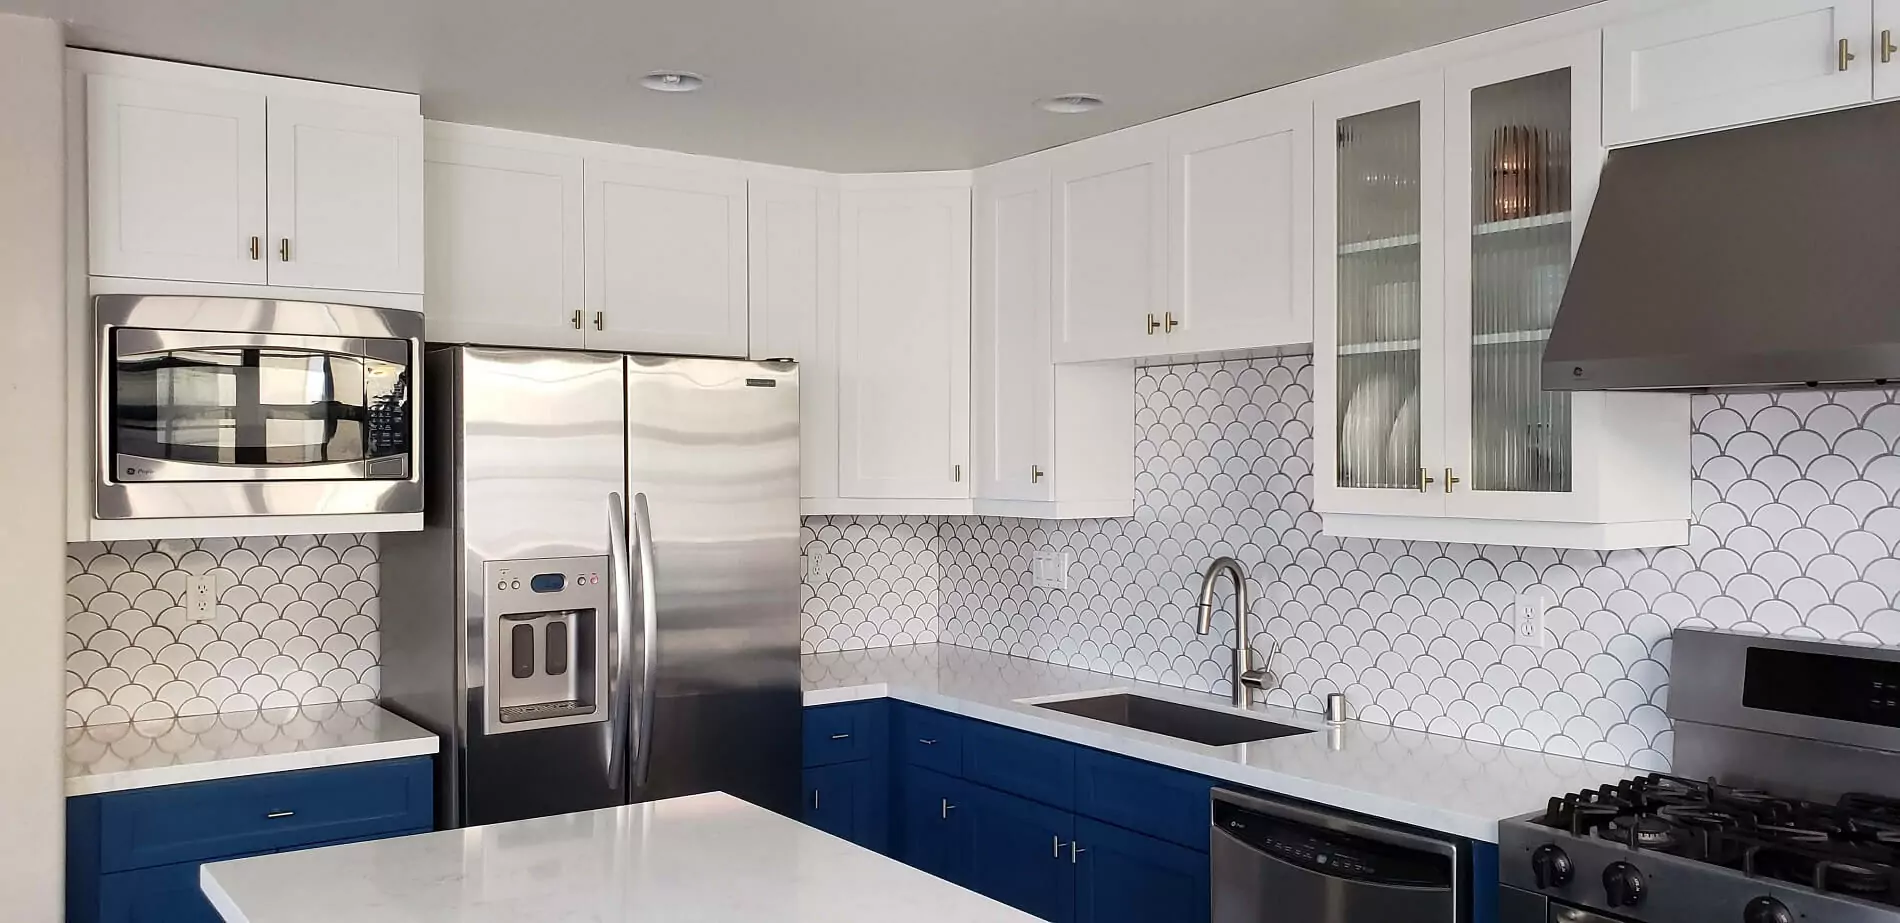 Home Remodeling, Kitchen Remodeling Navy Blue & White Kitchen Renovation 16